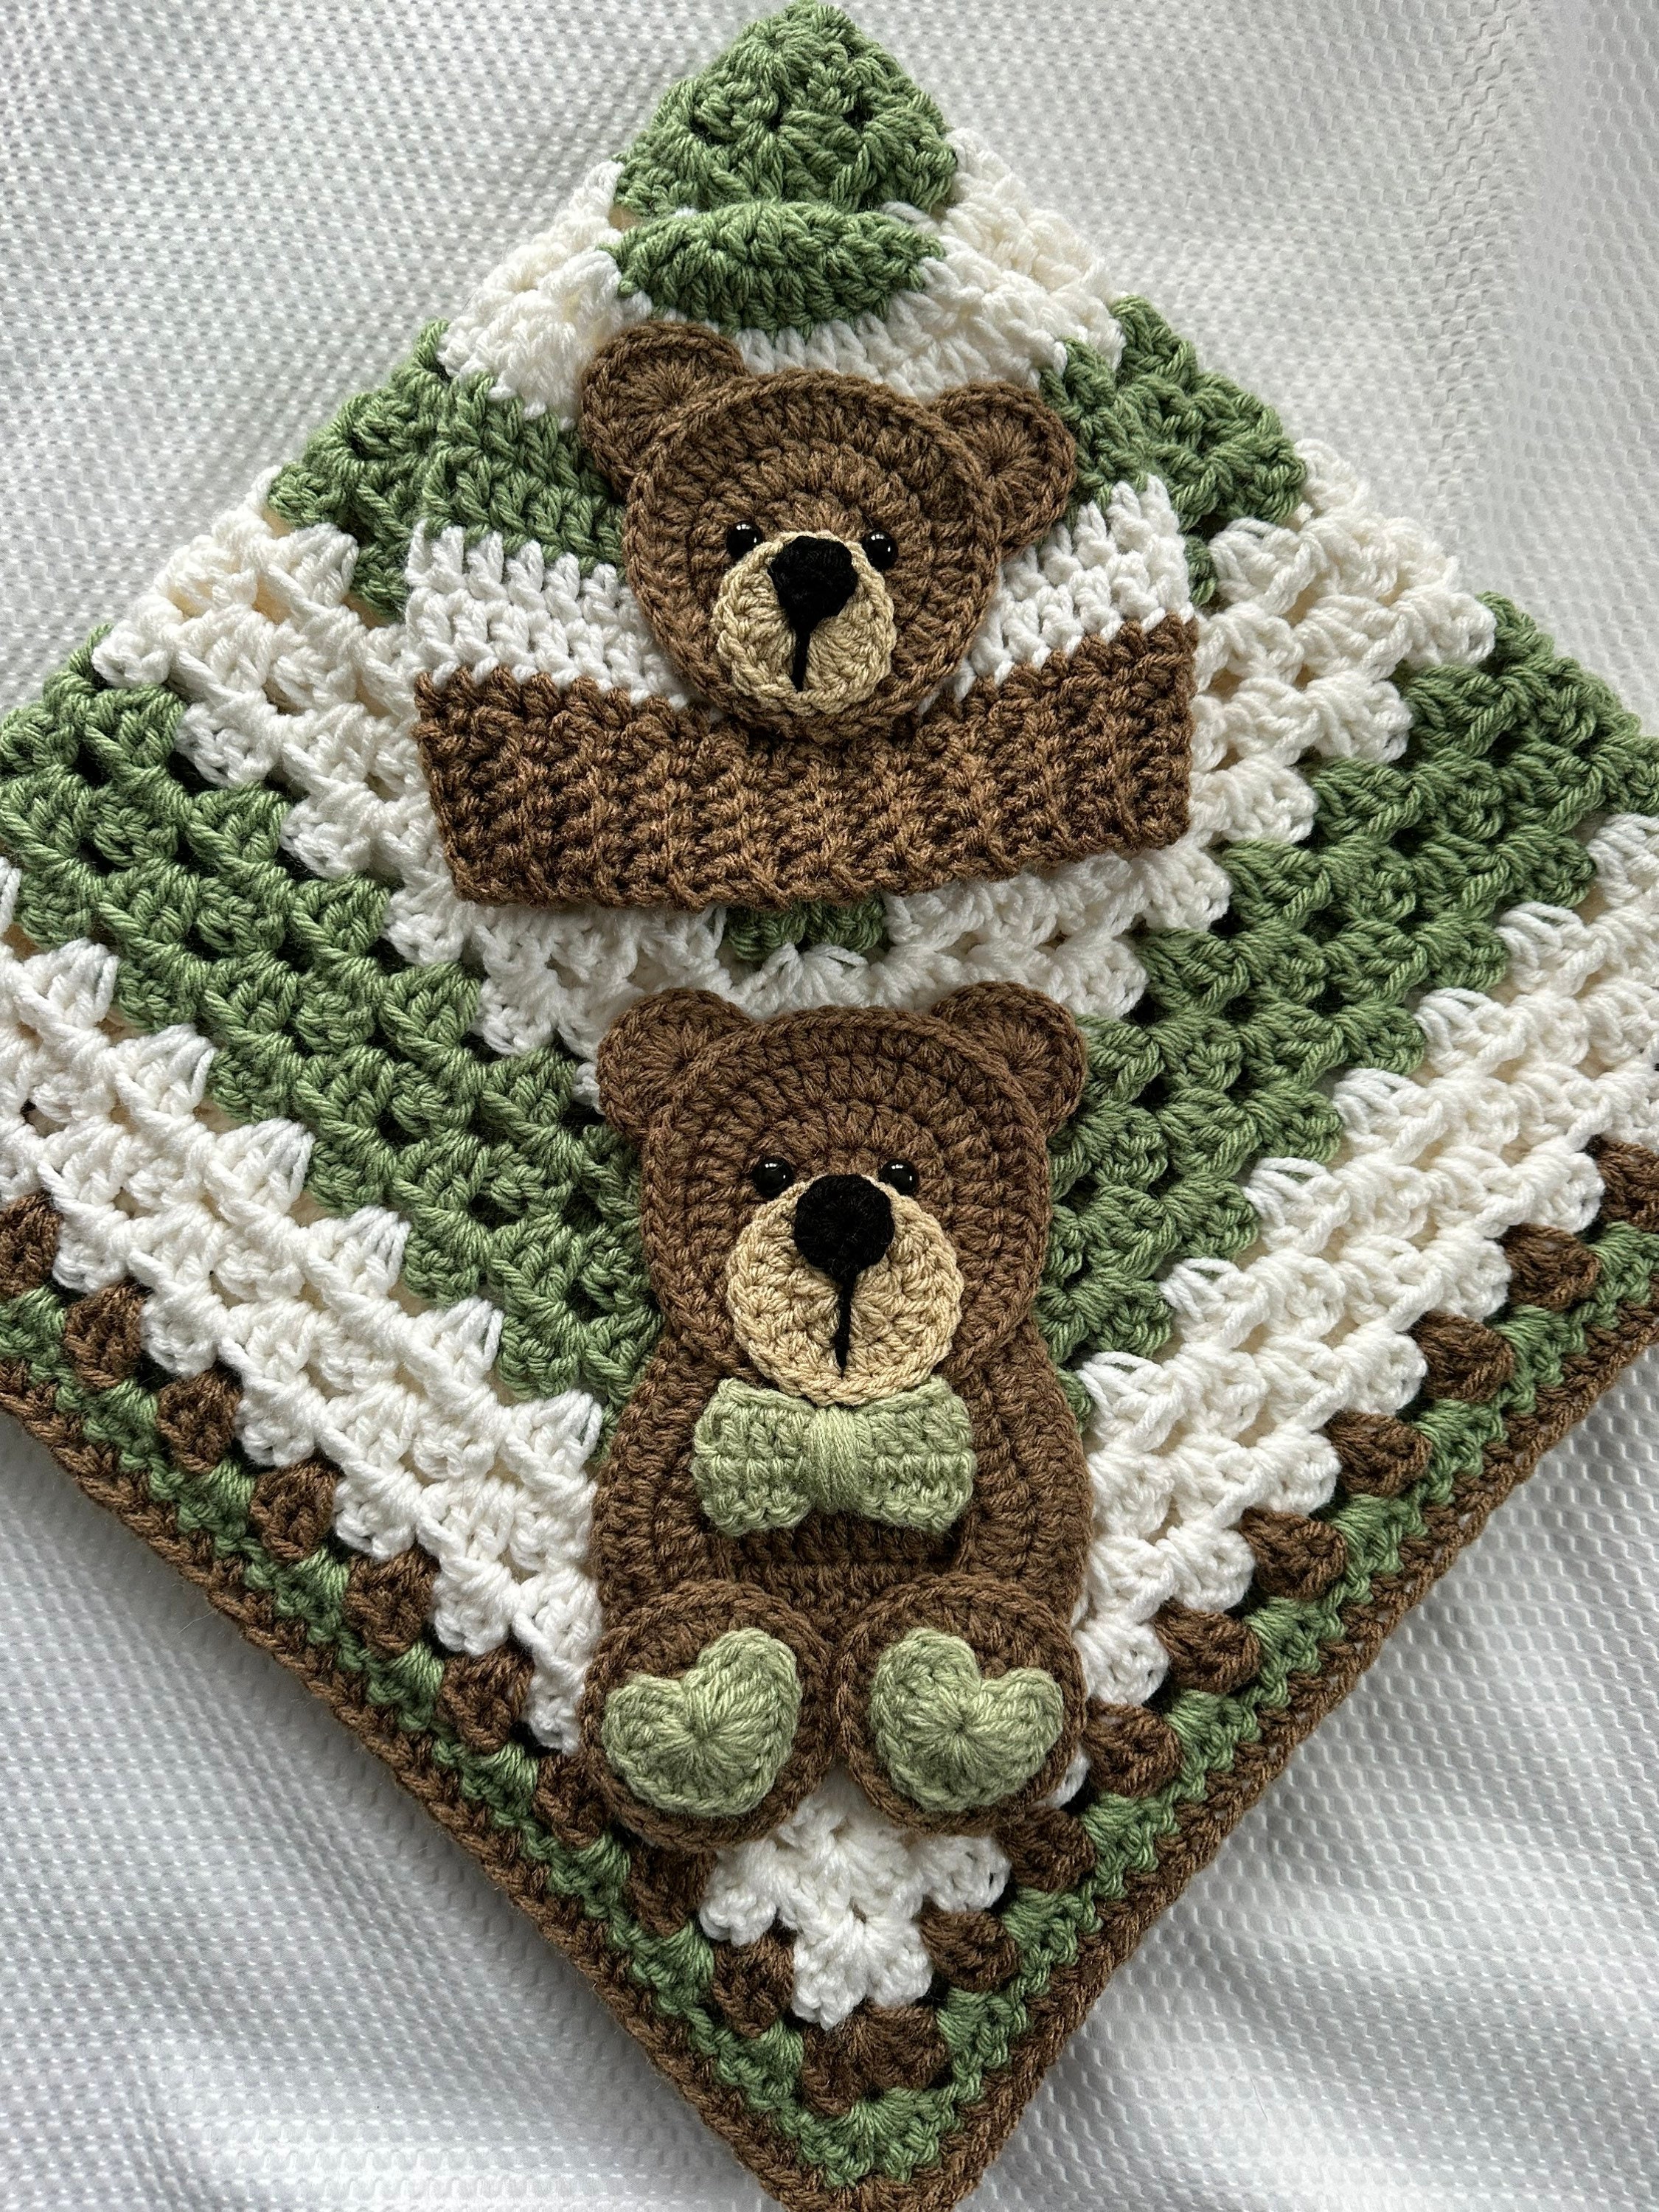 Family Tree Crochet Baby Blanket Kit Shaniko Wool